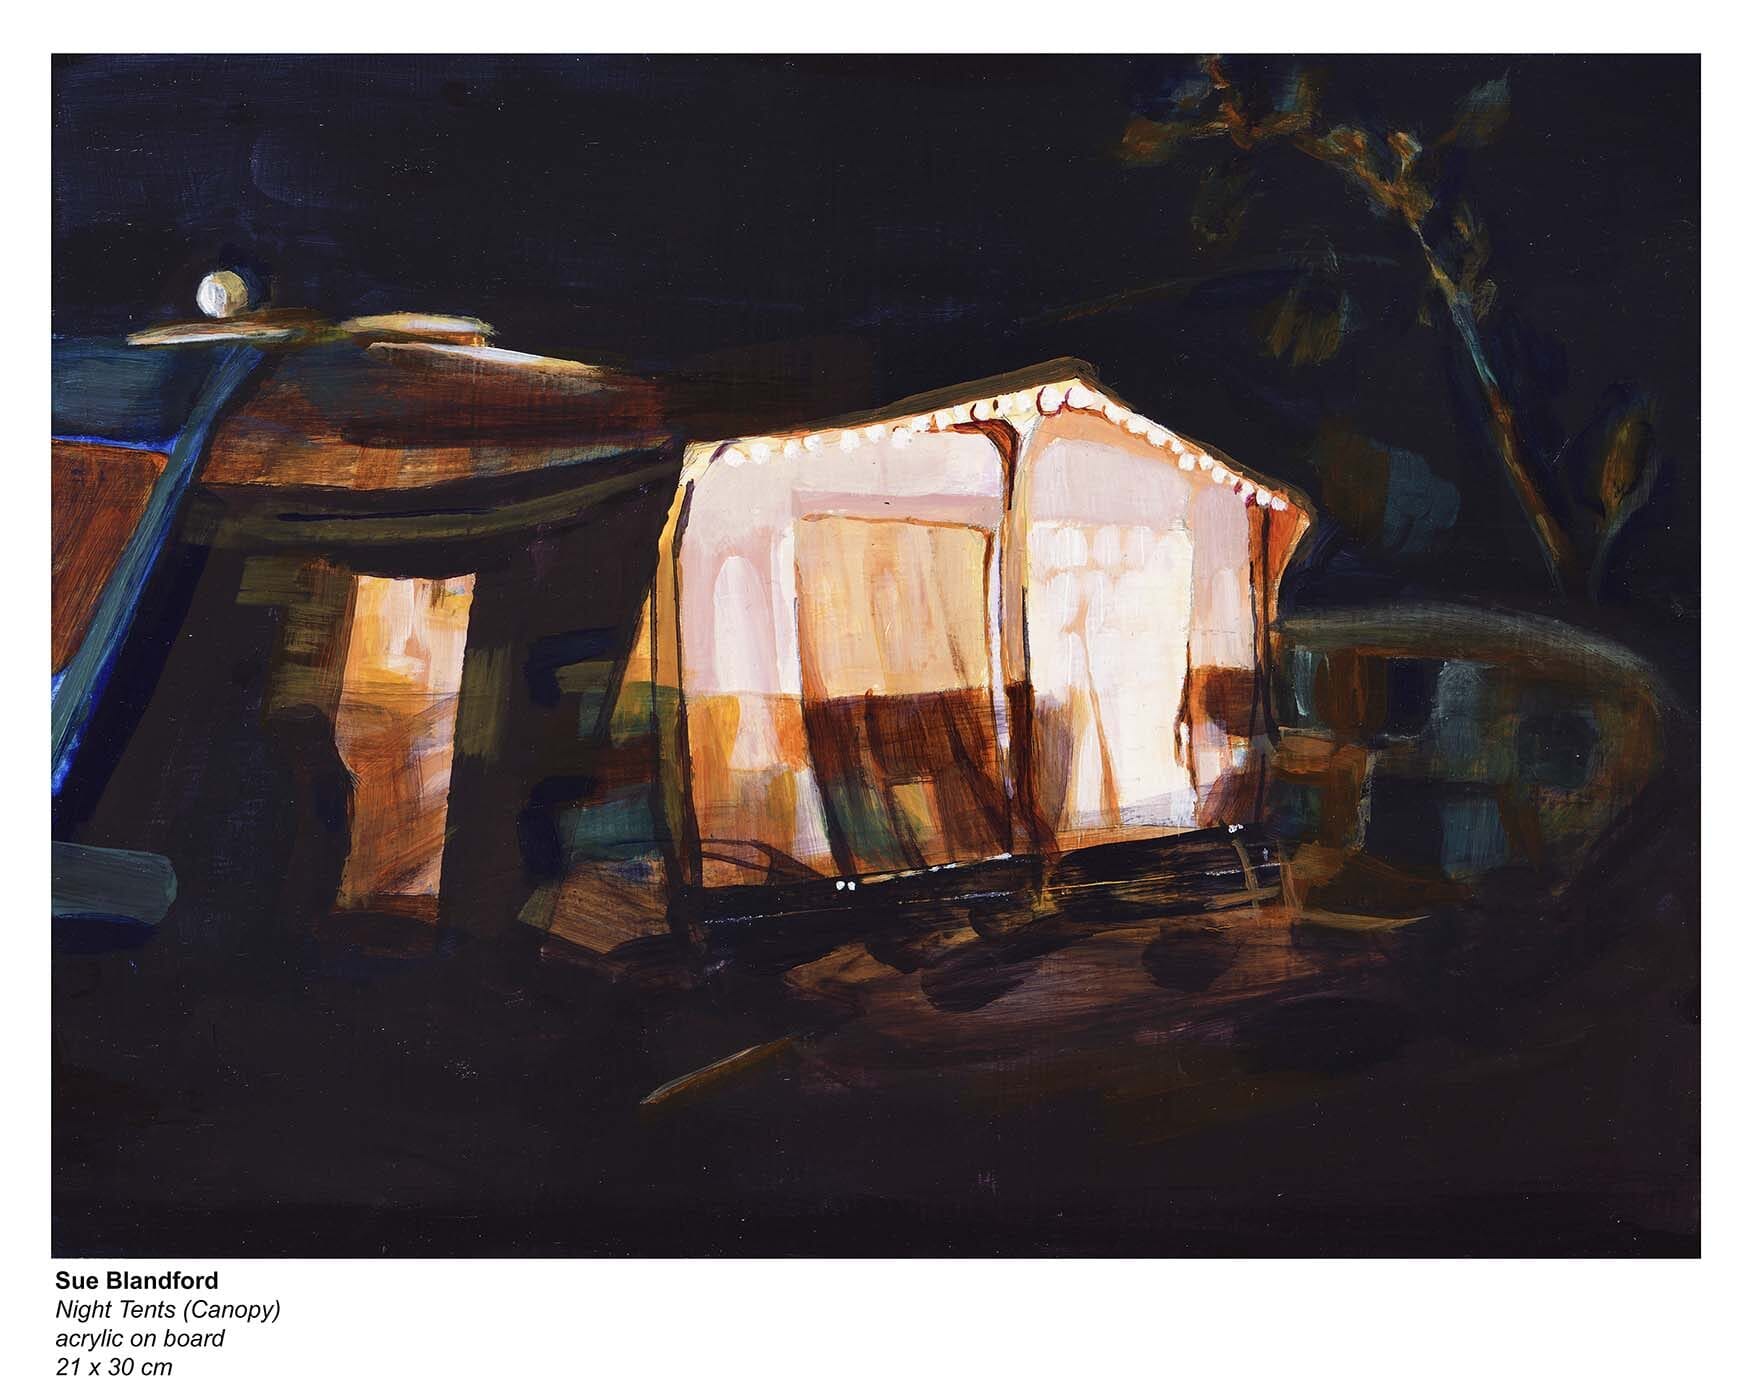  Night Tents (Canopy)